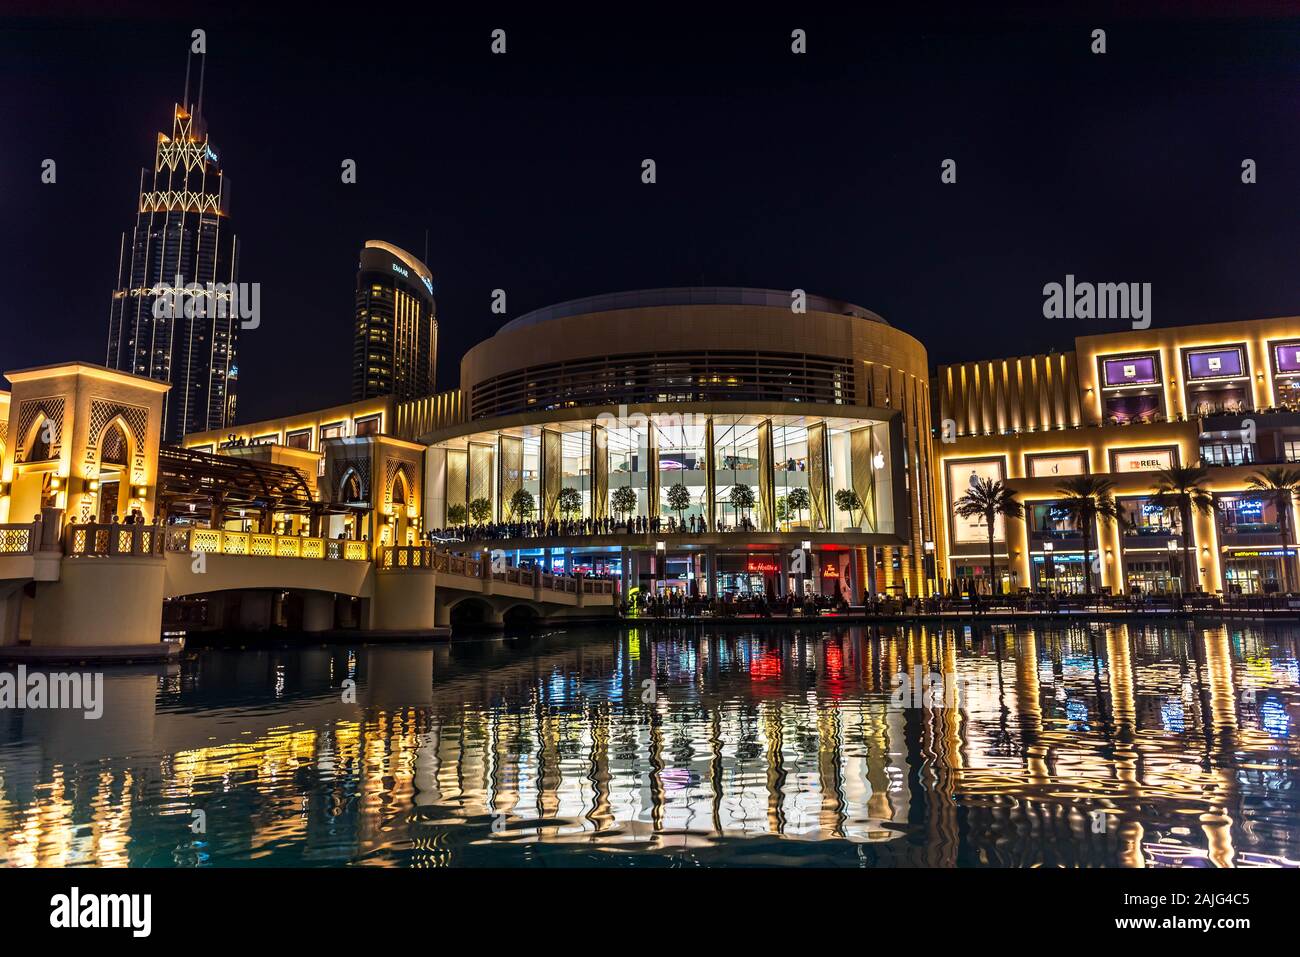 Dubai, Emiratos Árabes Unidos: Exterior de Dubai Mall por la noche enfrente de la torre Burj, escaparates iluminados, con marcas de moda de lujo Foto de stock